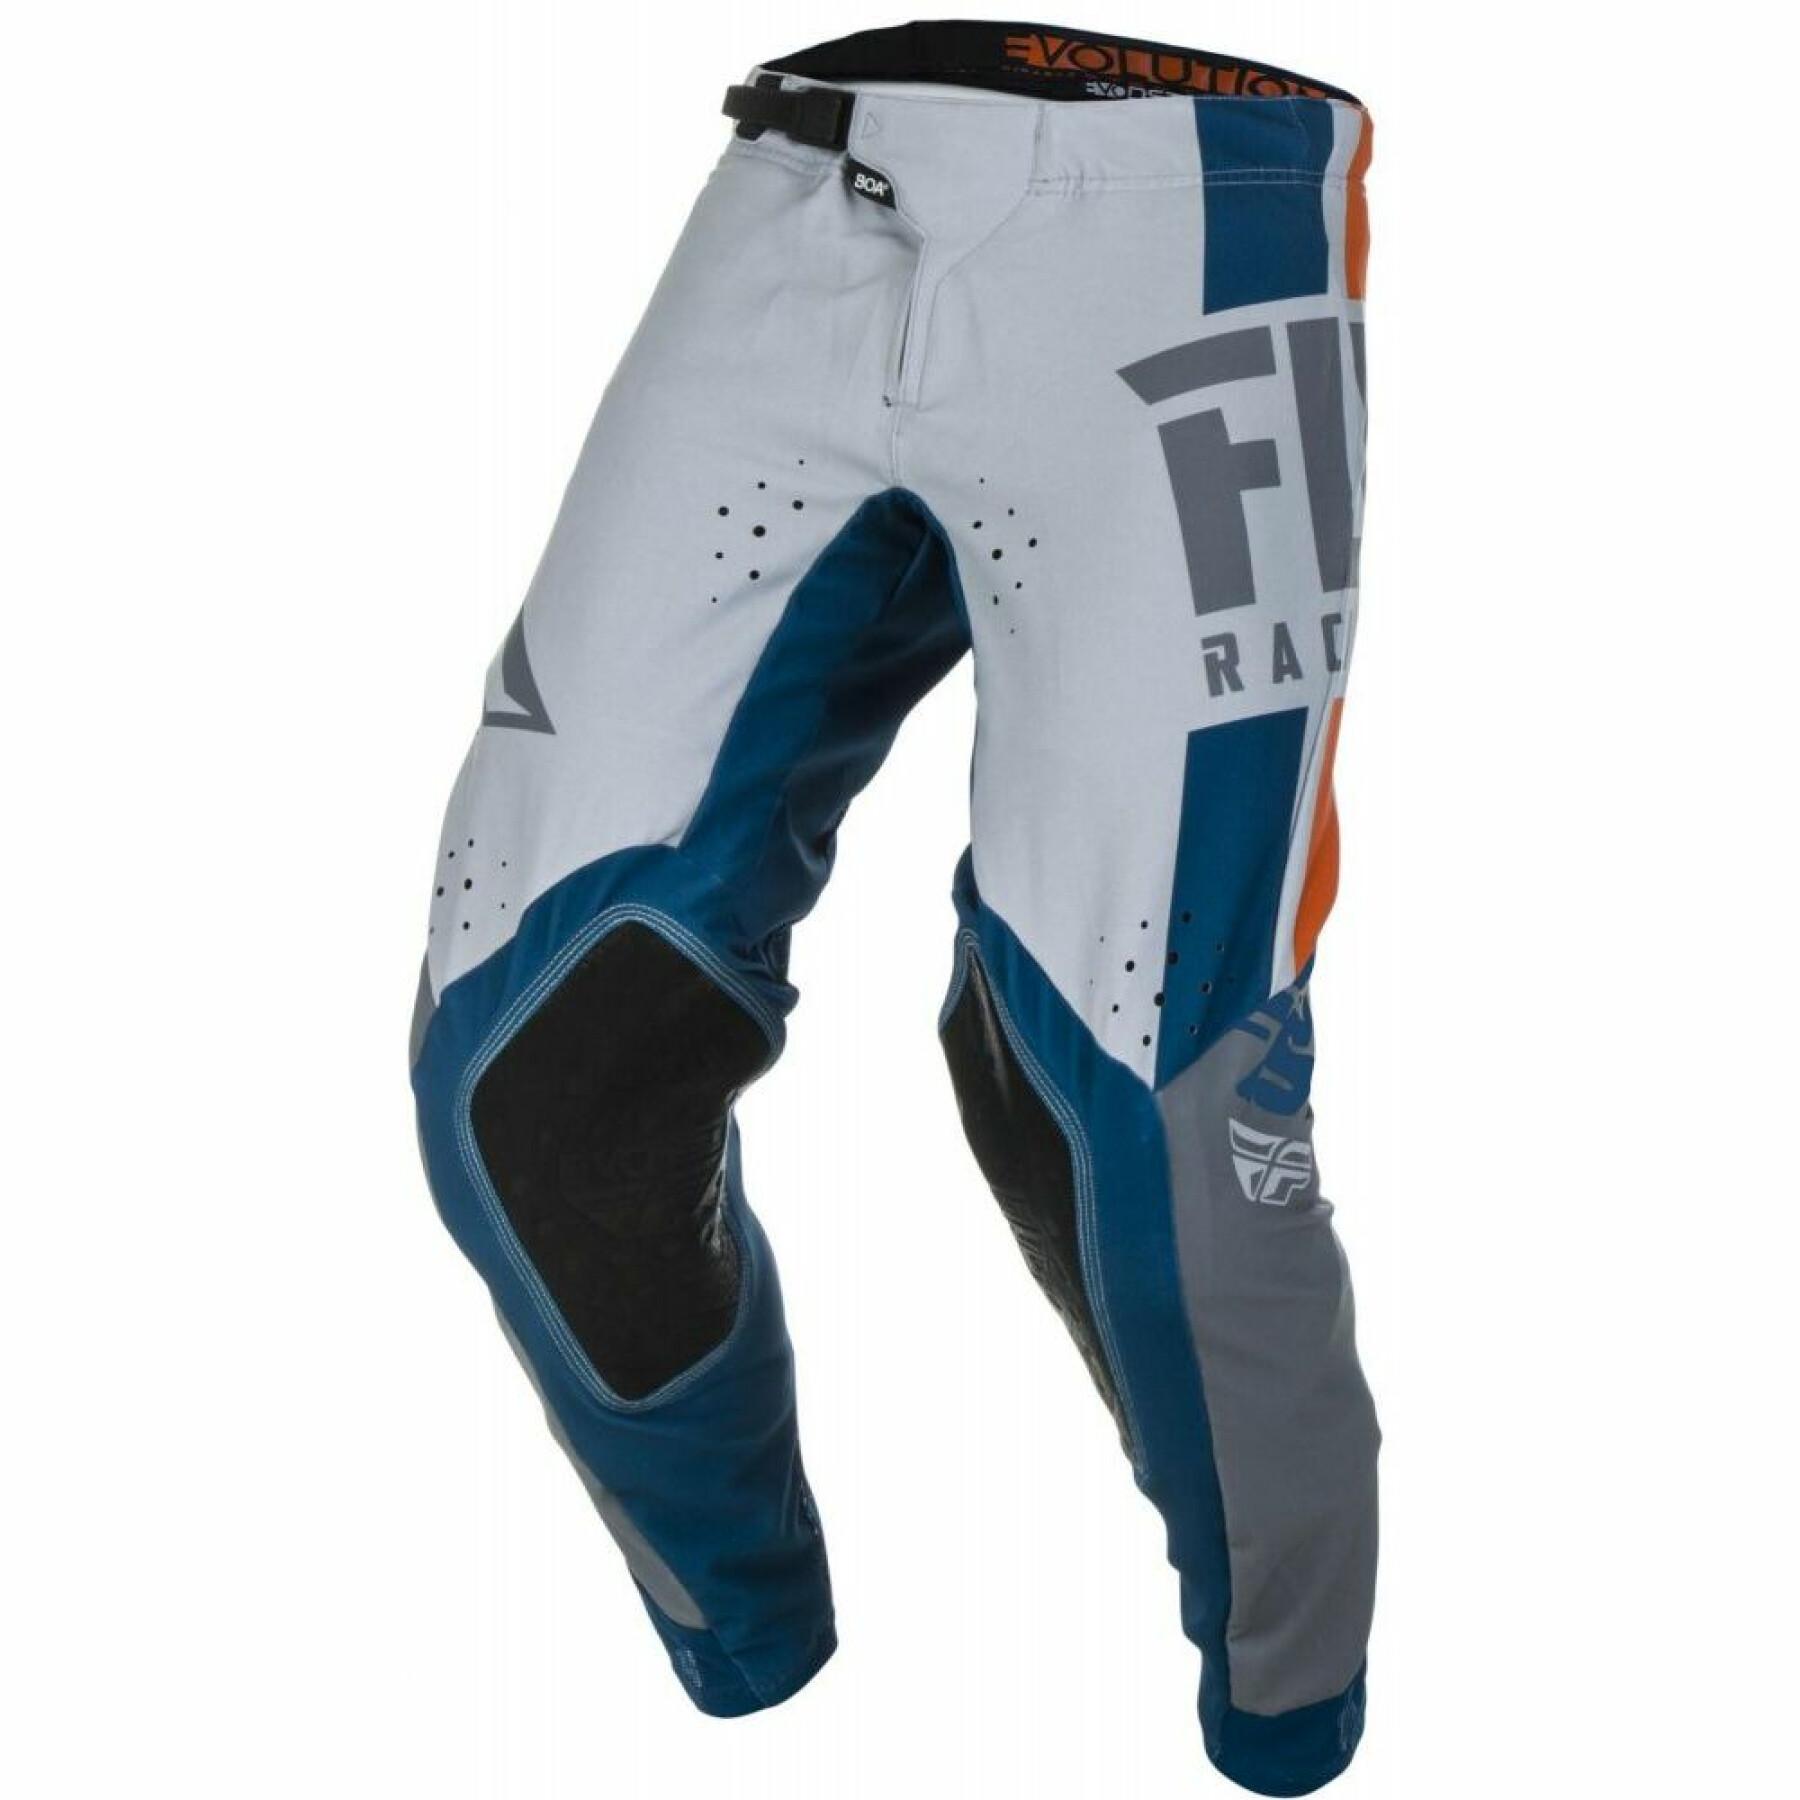 Pantaloni per bambini Fly Racing Evo 2019